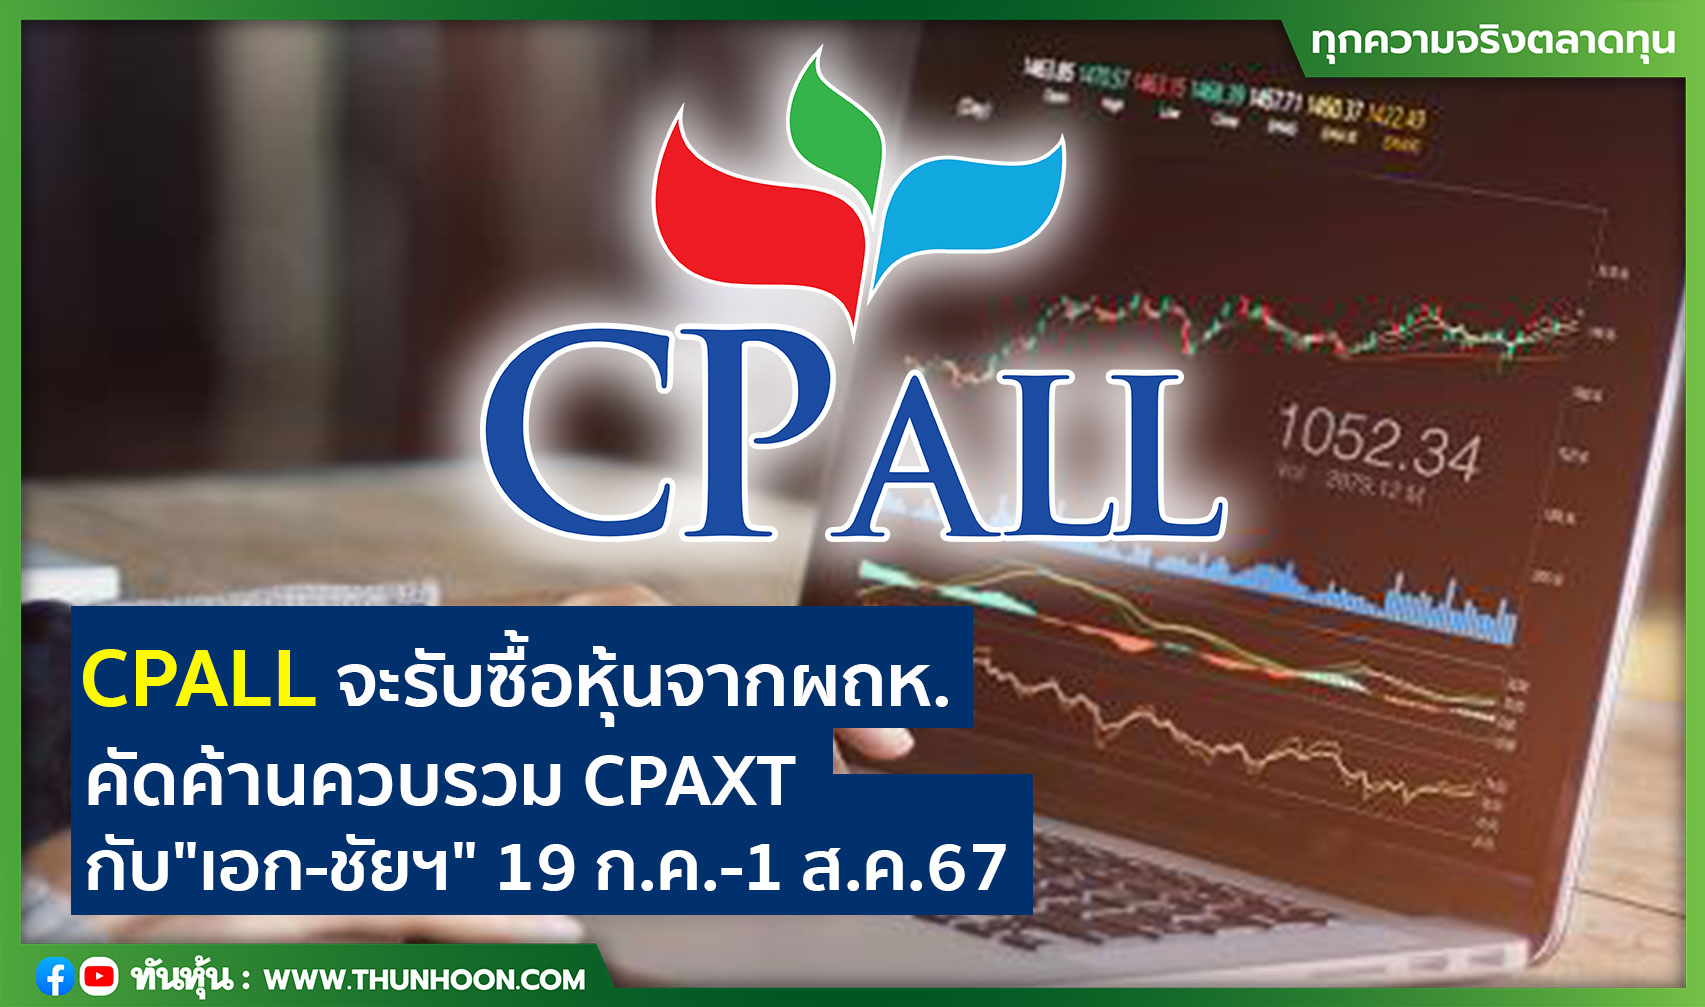 CPALL จะรับซื้อหุ้นจากผถห.ที่คัดค้านควบรวม CPAXT กับ"เอก-ชัยฯ" 19 ก.ค.-1 ส.ค.67